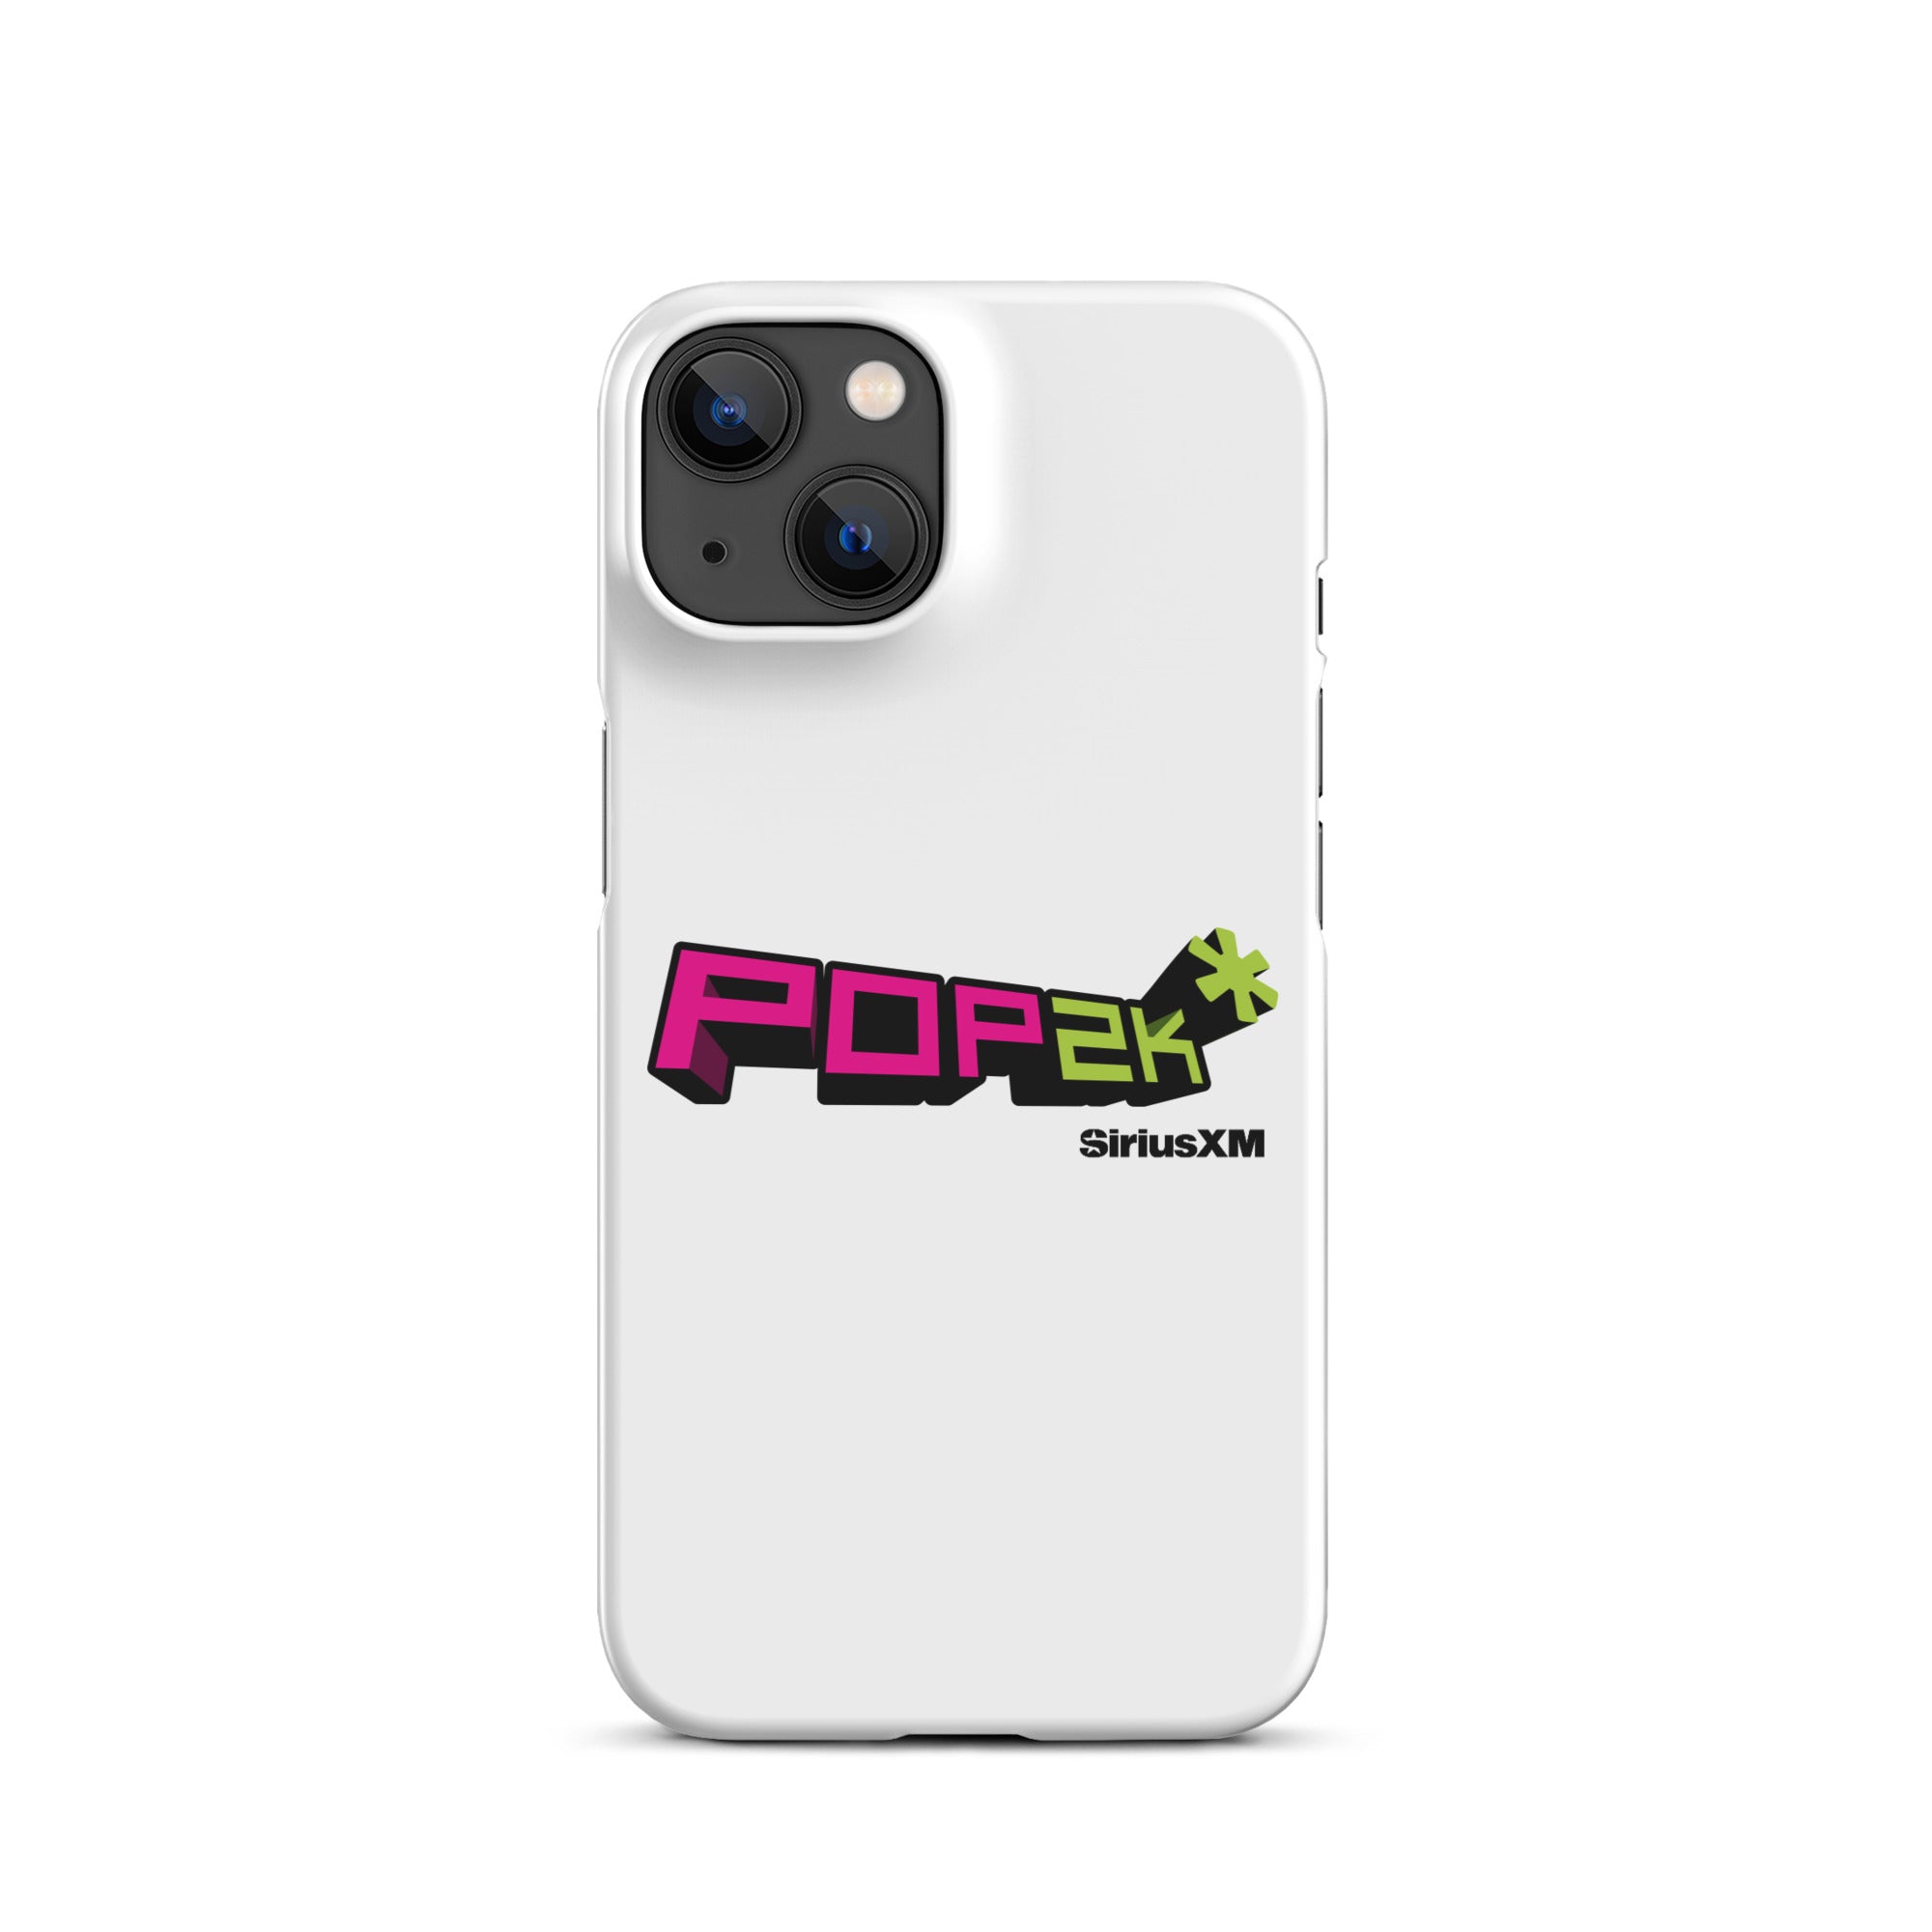 Pop 2k: iPhone® Snap Case